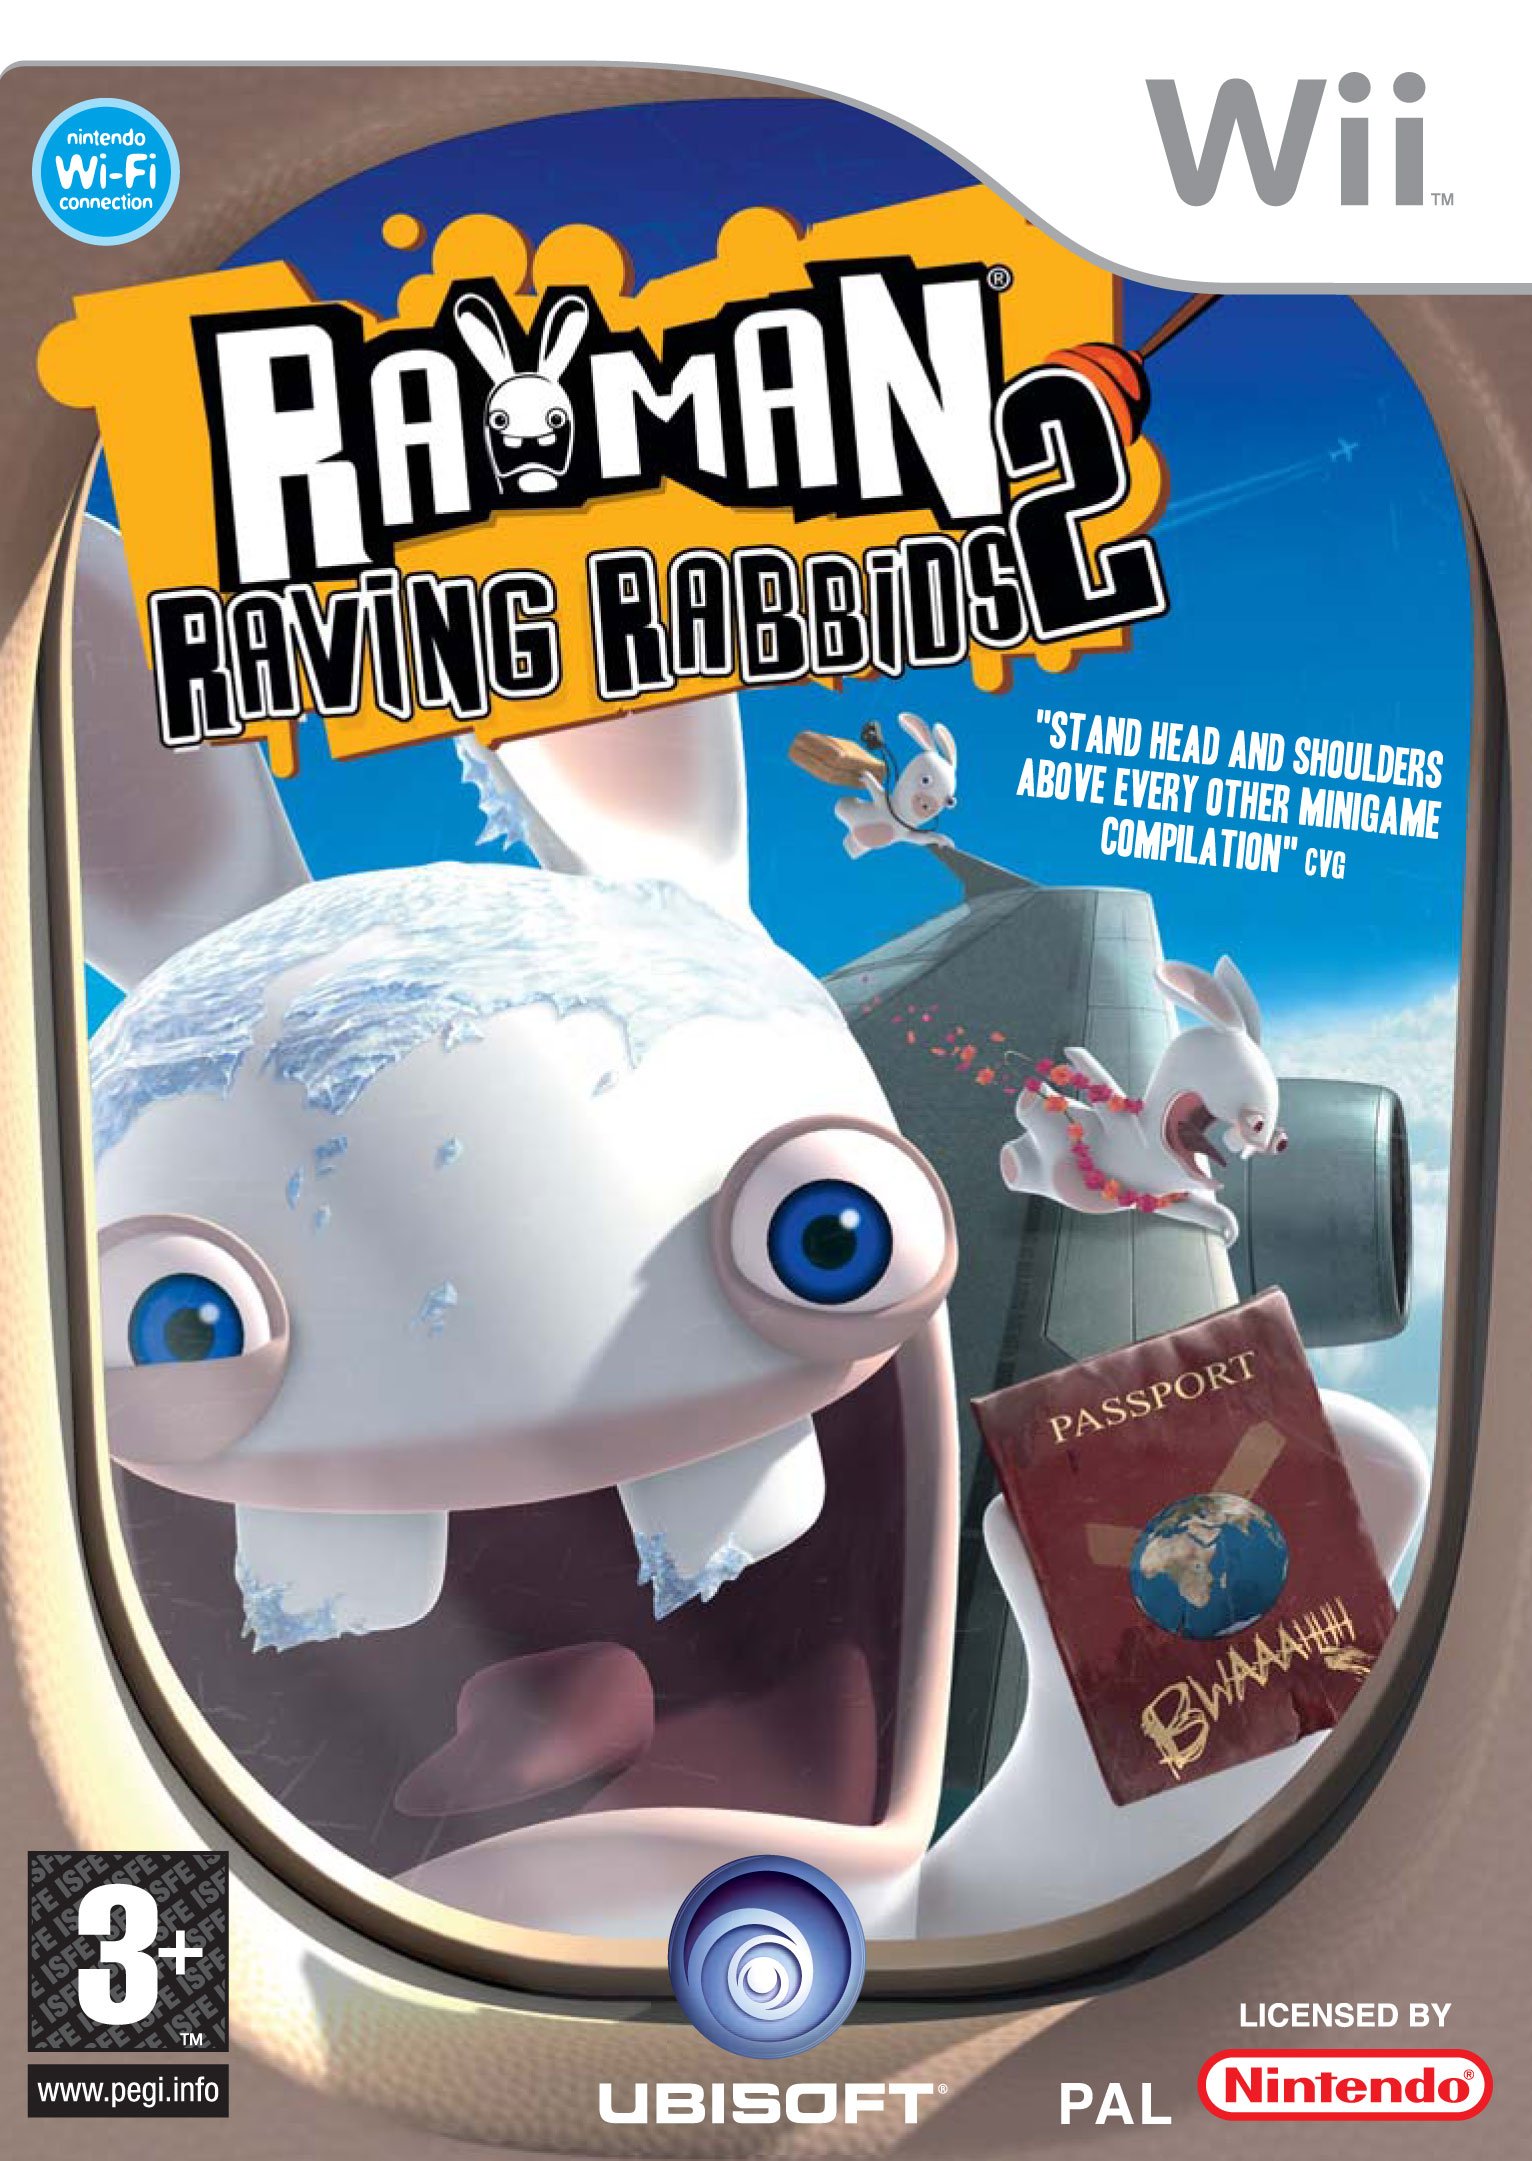 rayman rabbis